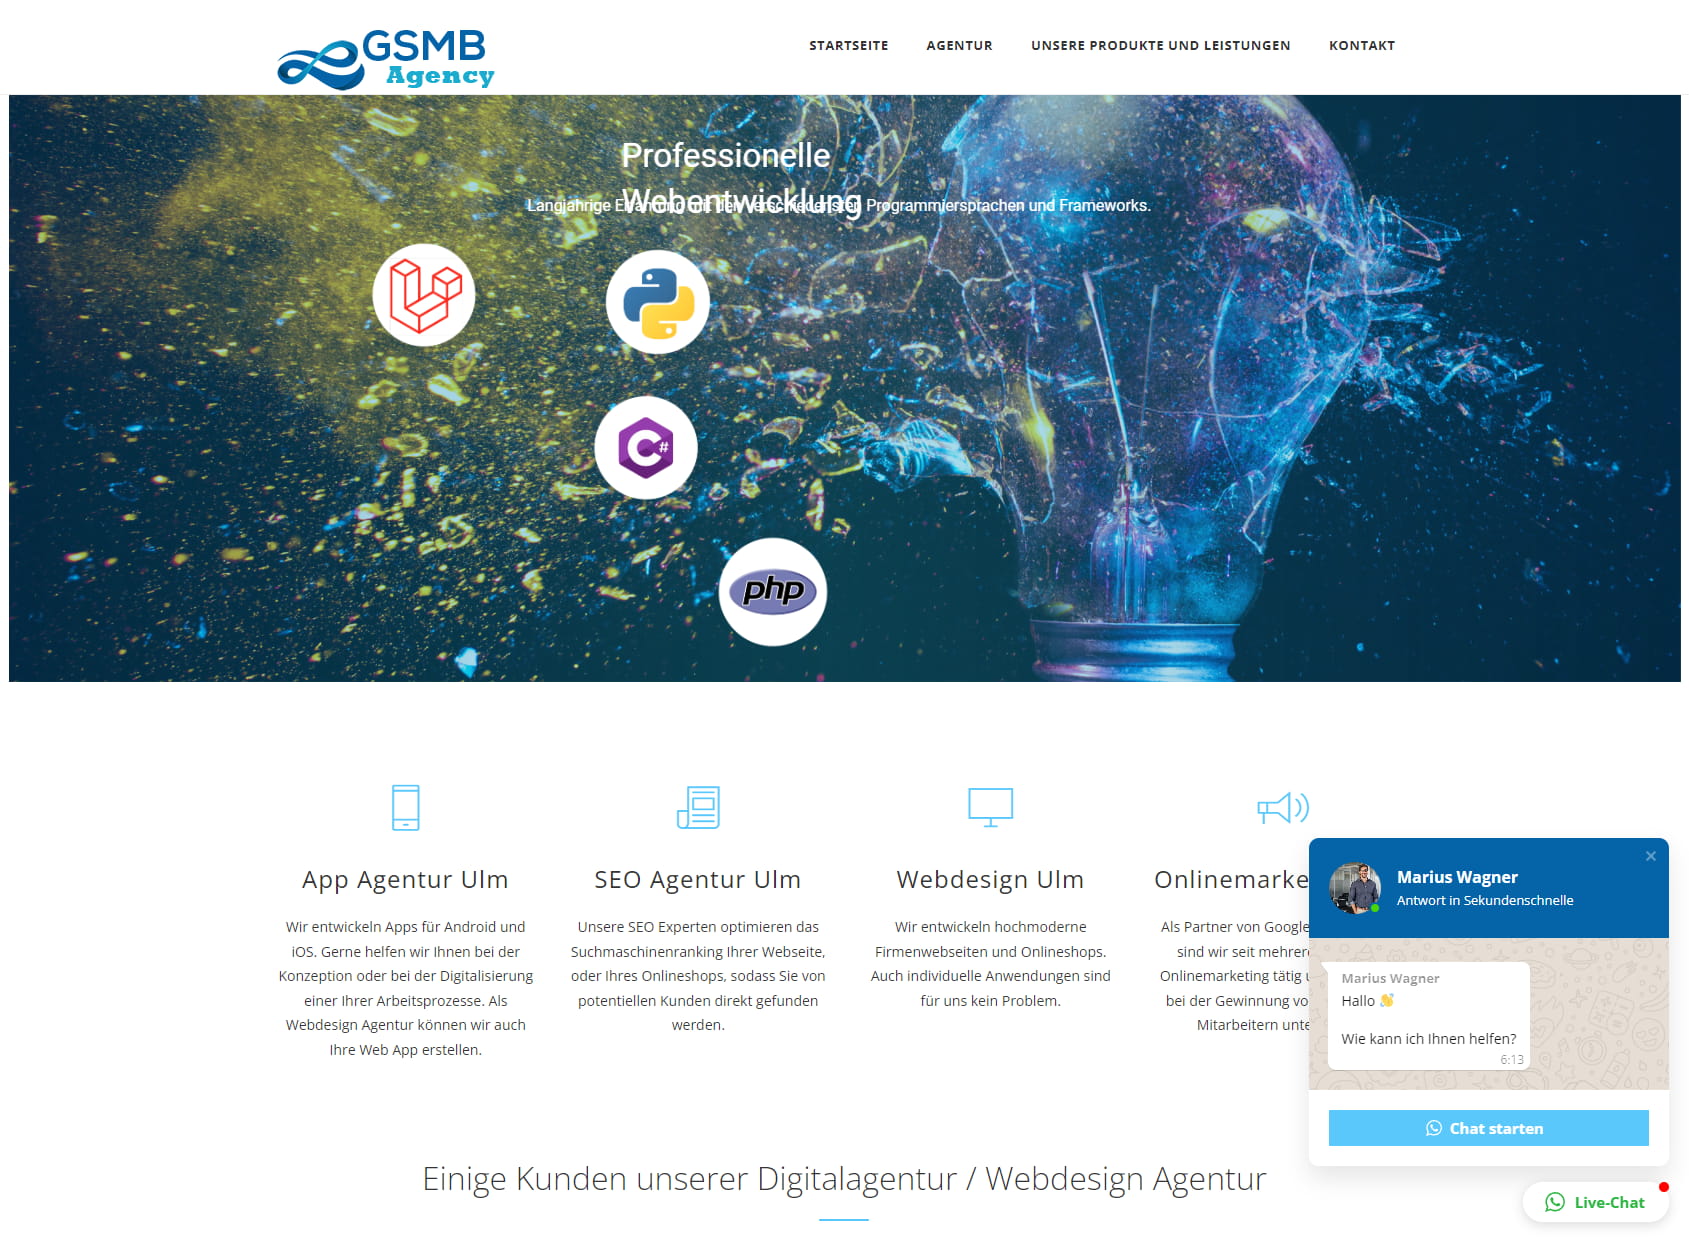 GSMB Agency GmbH / Webdesign und App Agentur Ulm